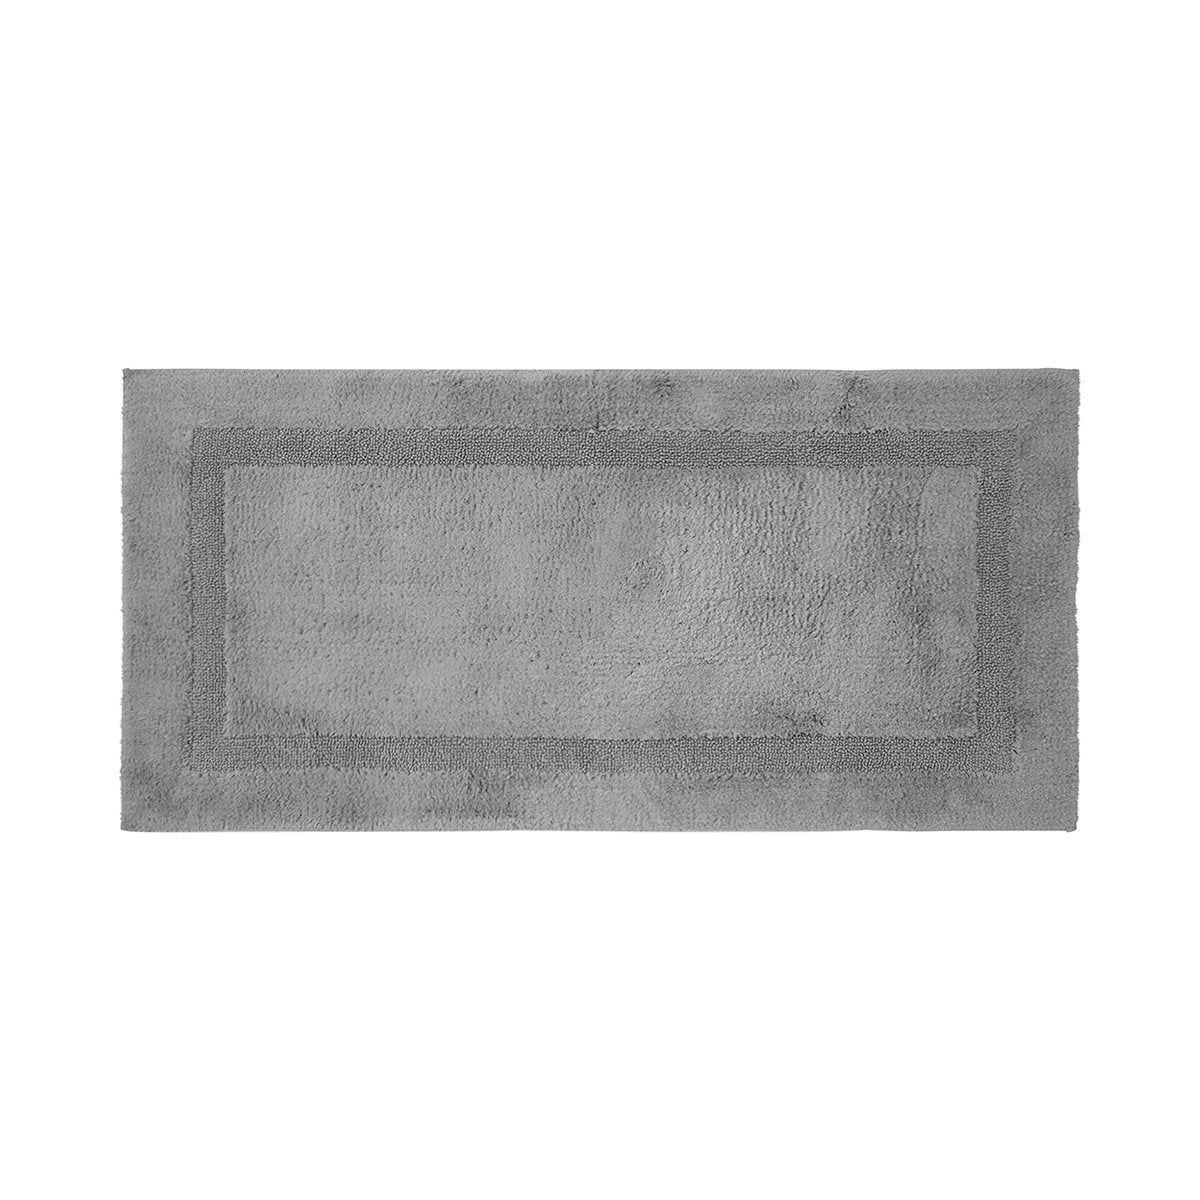 Aquilon Platine Reversible Bath Rug by Yves Delorme | Fig Linens - rectangle, gray bath mat, rug